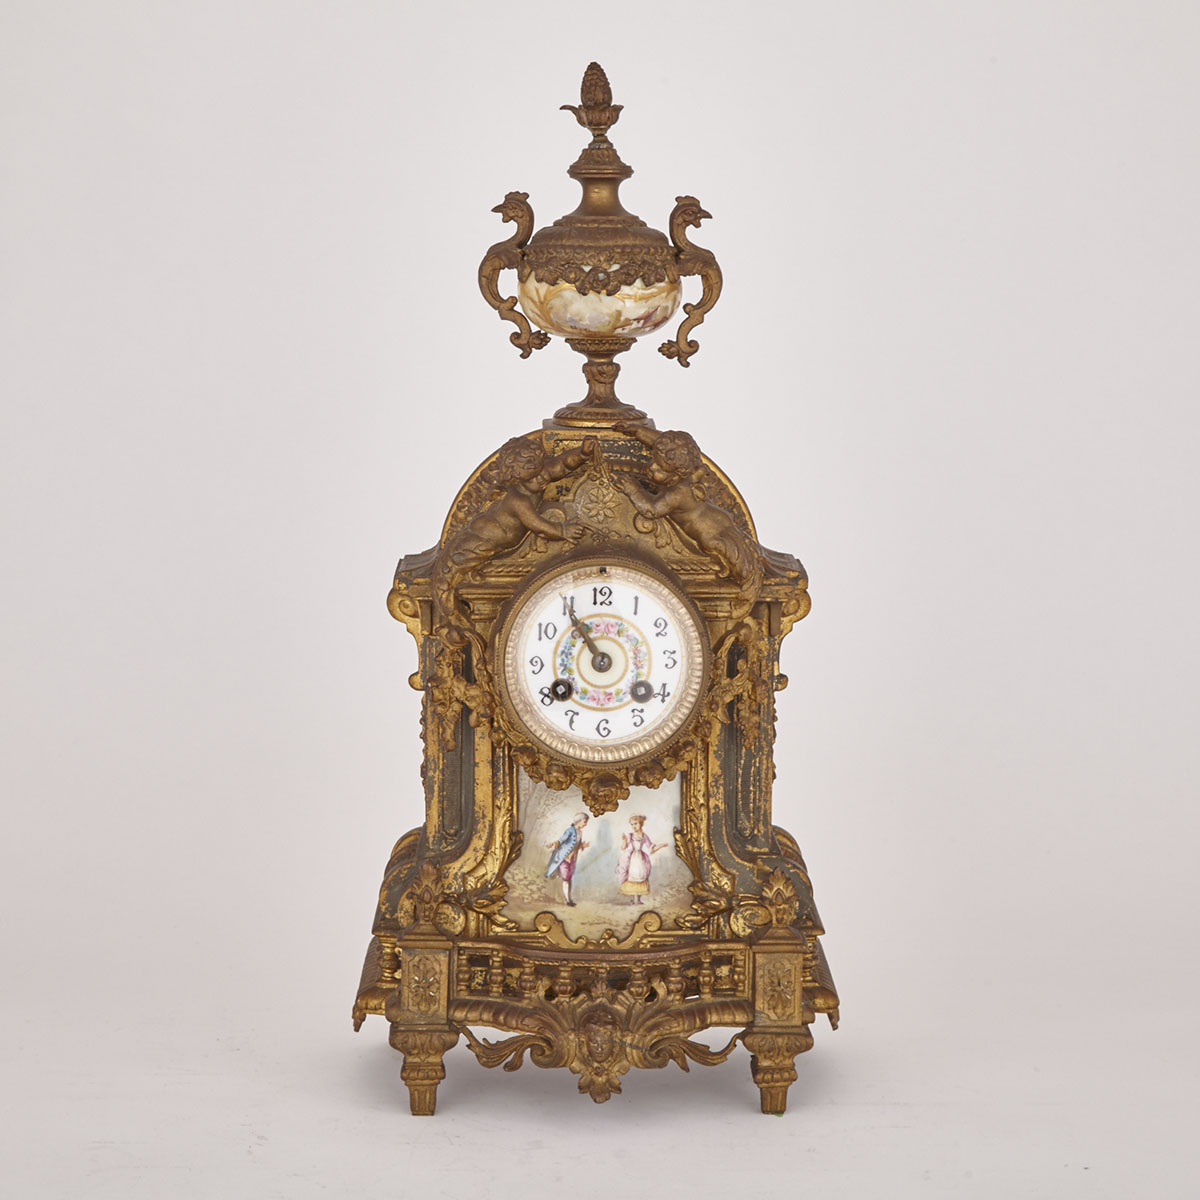 French Louis XVI Style Sevres Porcelain Mounted Gilt Metal Mantel Clock, 19th century